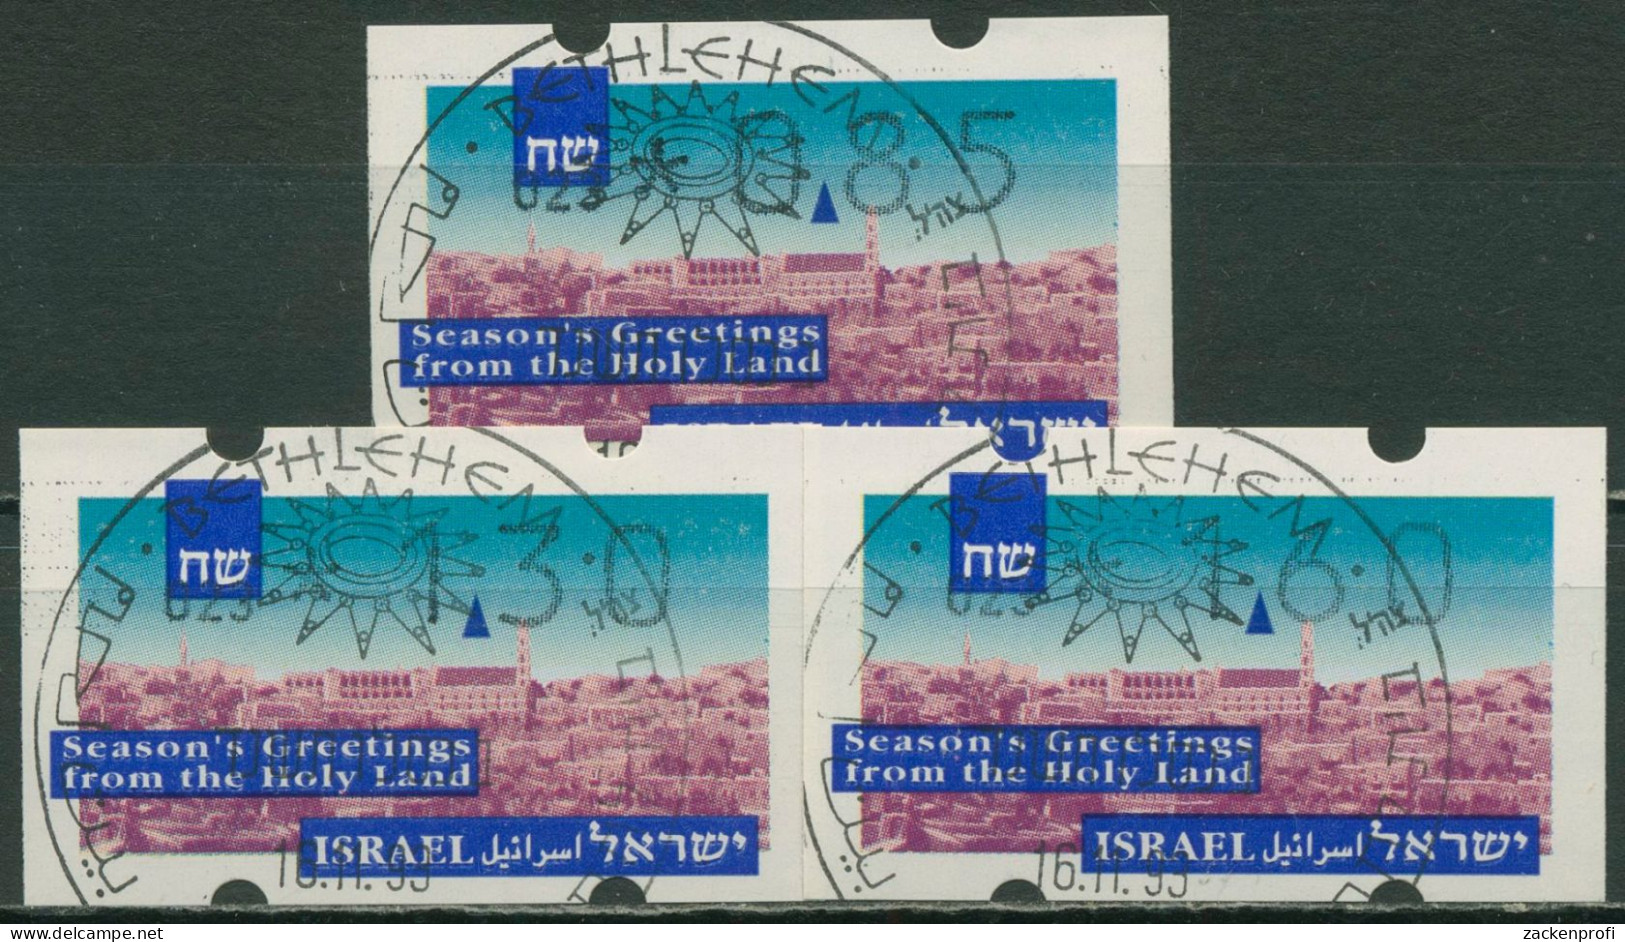 Israel ATM 1993 Weihnachten Automat 023, Porto-Satz 3 Werte, ATM 7 S1 Gestempelt - Vignettes D'affranchissement (Frama)